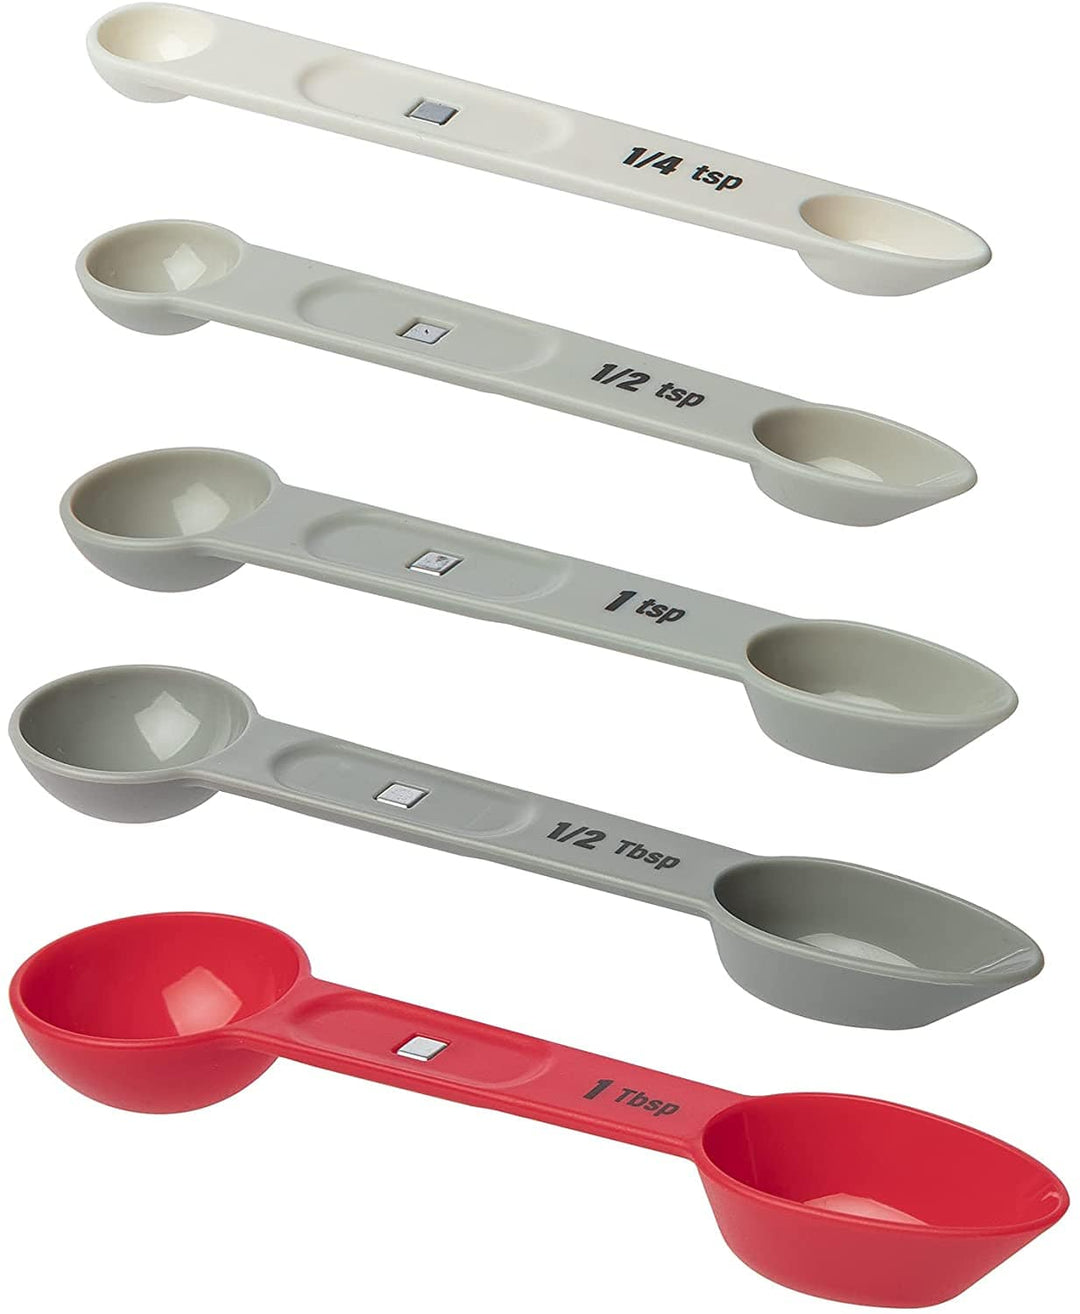 Progressive Prep Solutions 4 pc Leveling Measuring Spoons